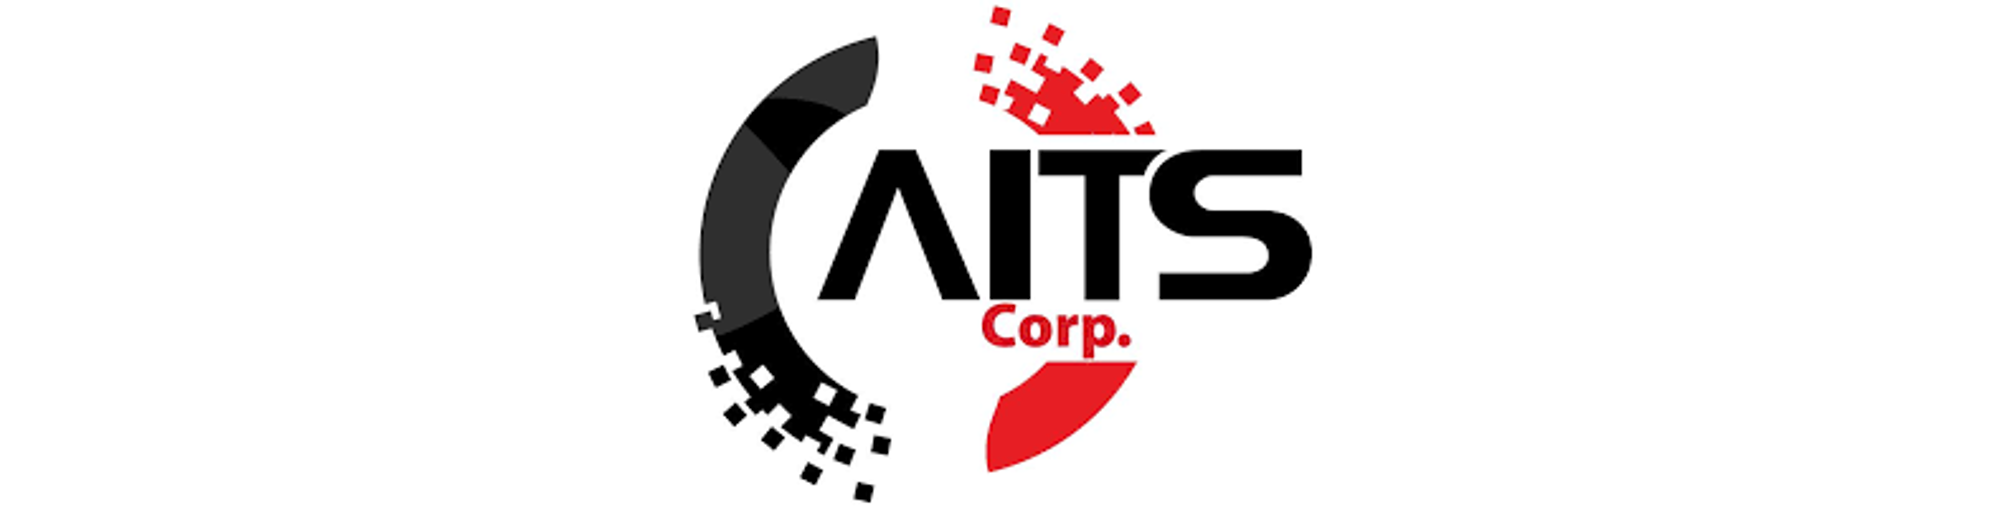 AITS Corp.